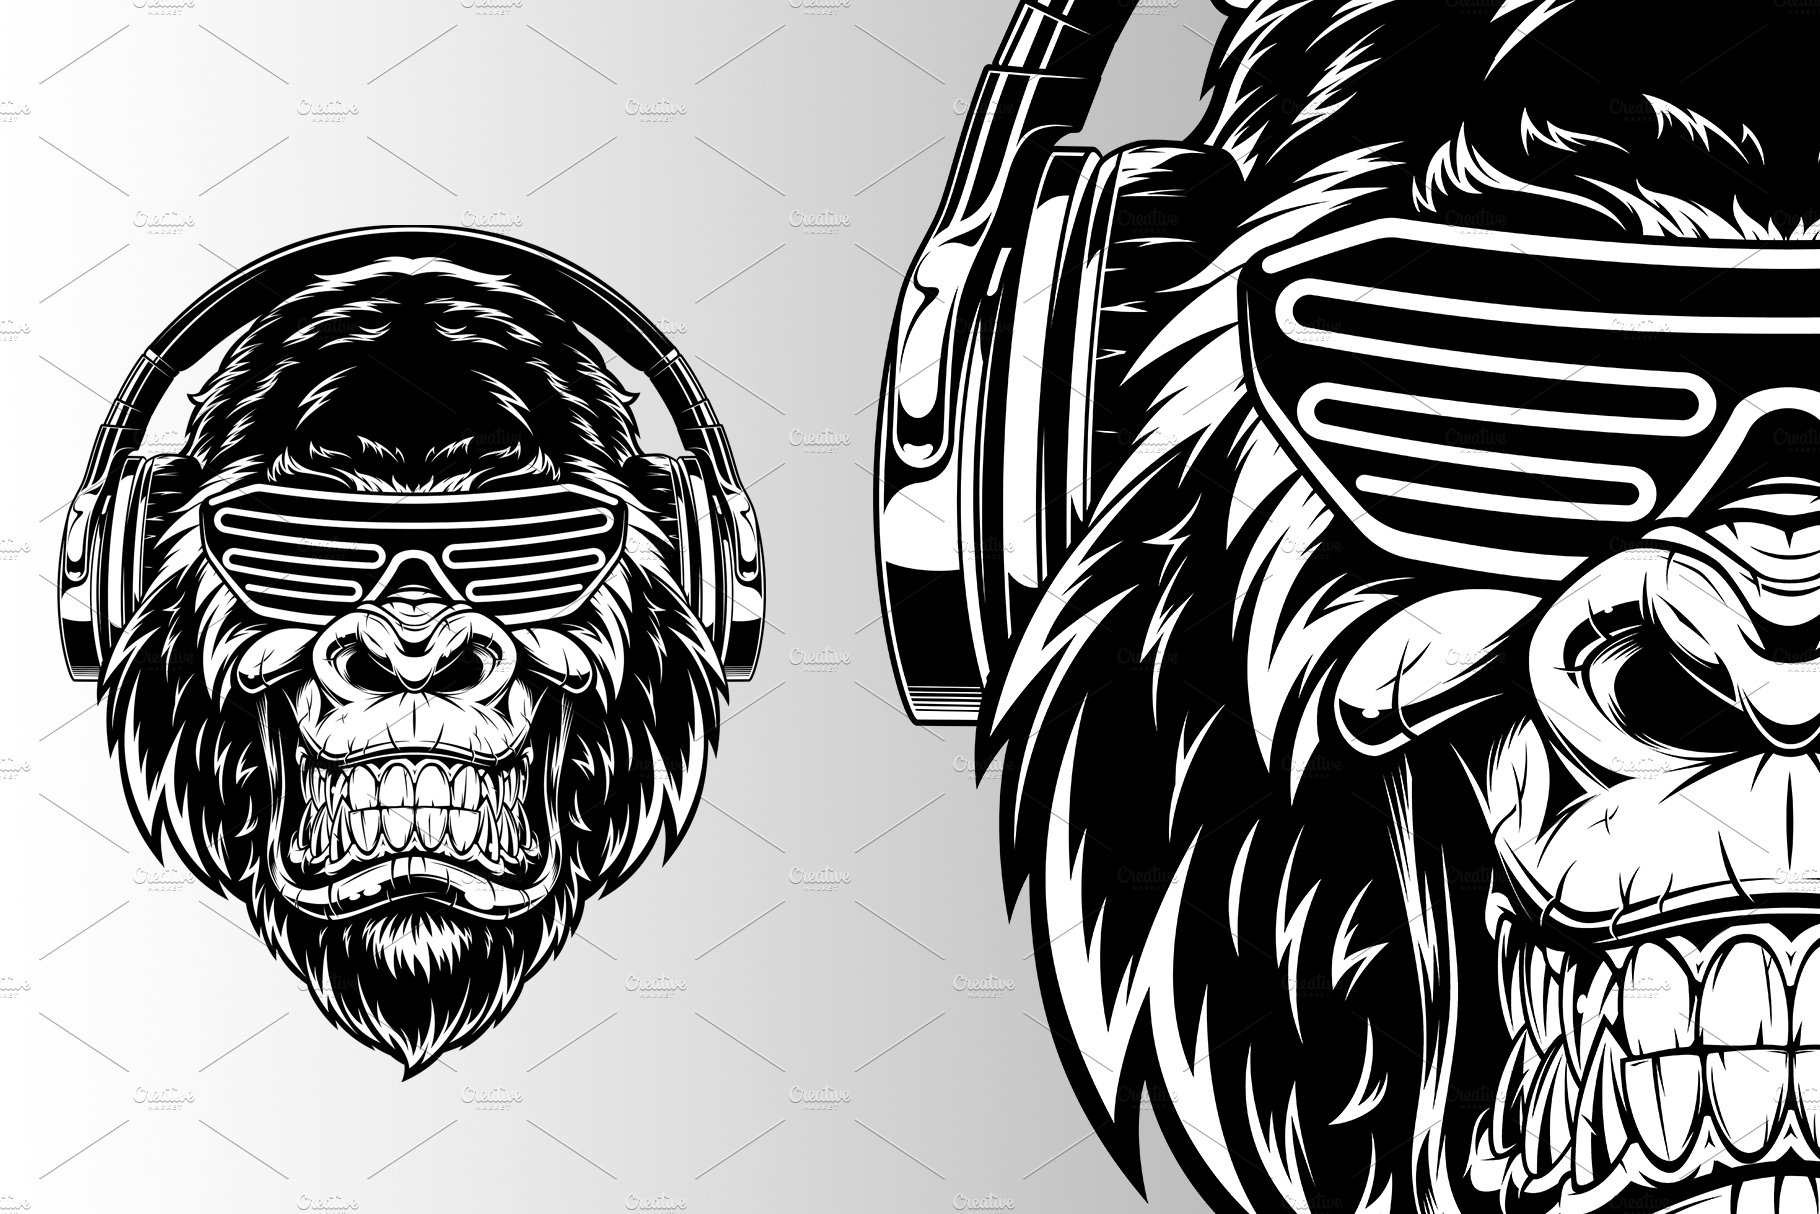 gorilla in headphones cover image.